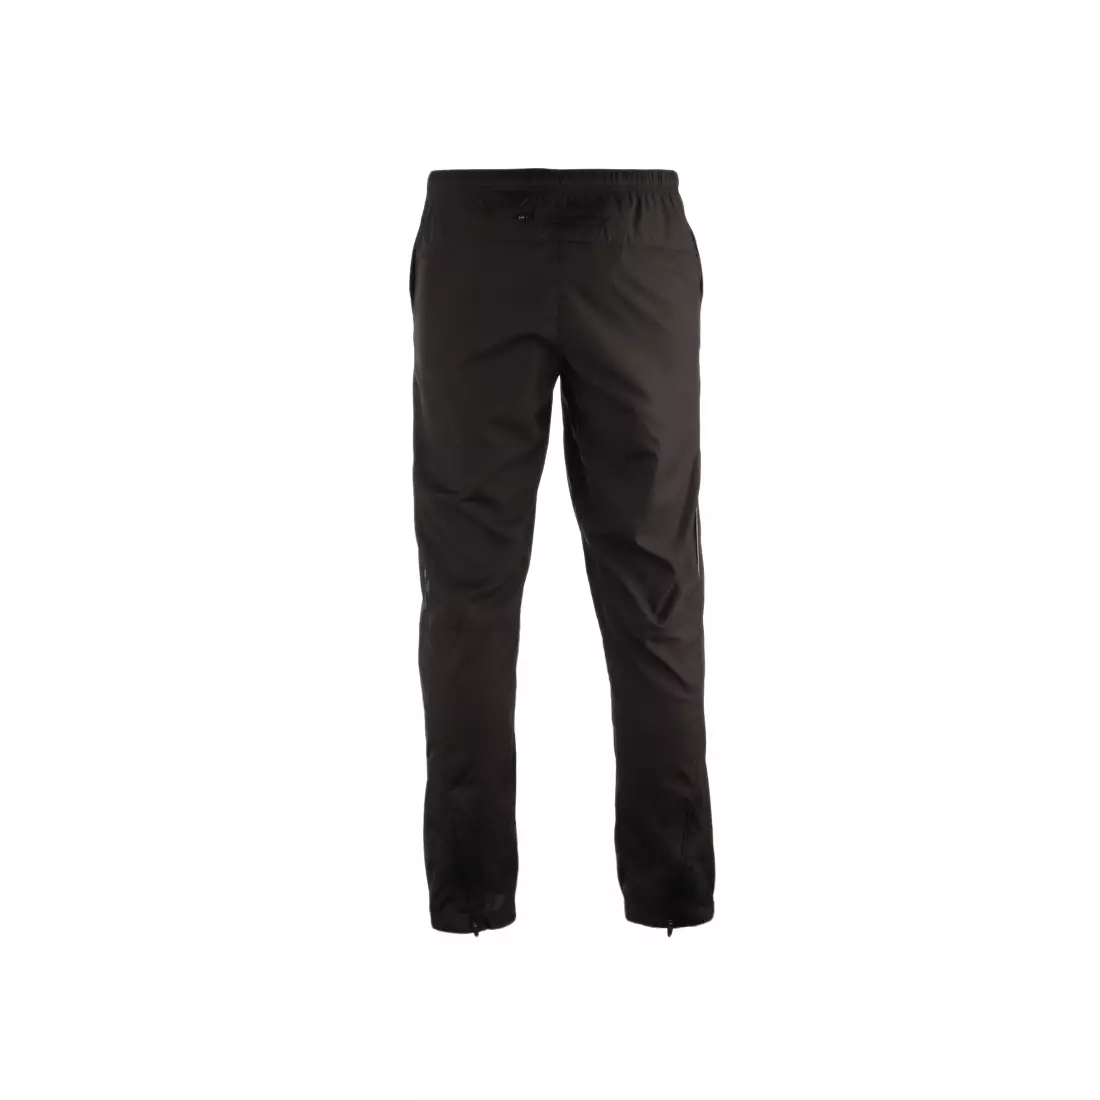 ASICS 321310-0900 - HERMES, loose running pants, color: Black